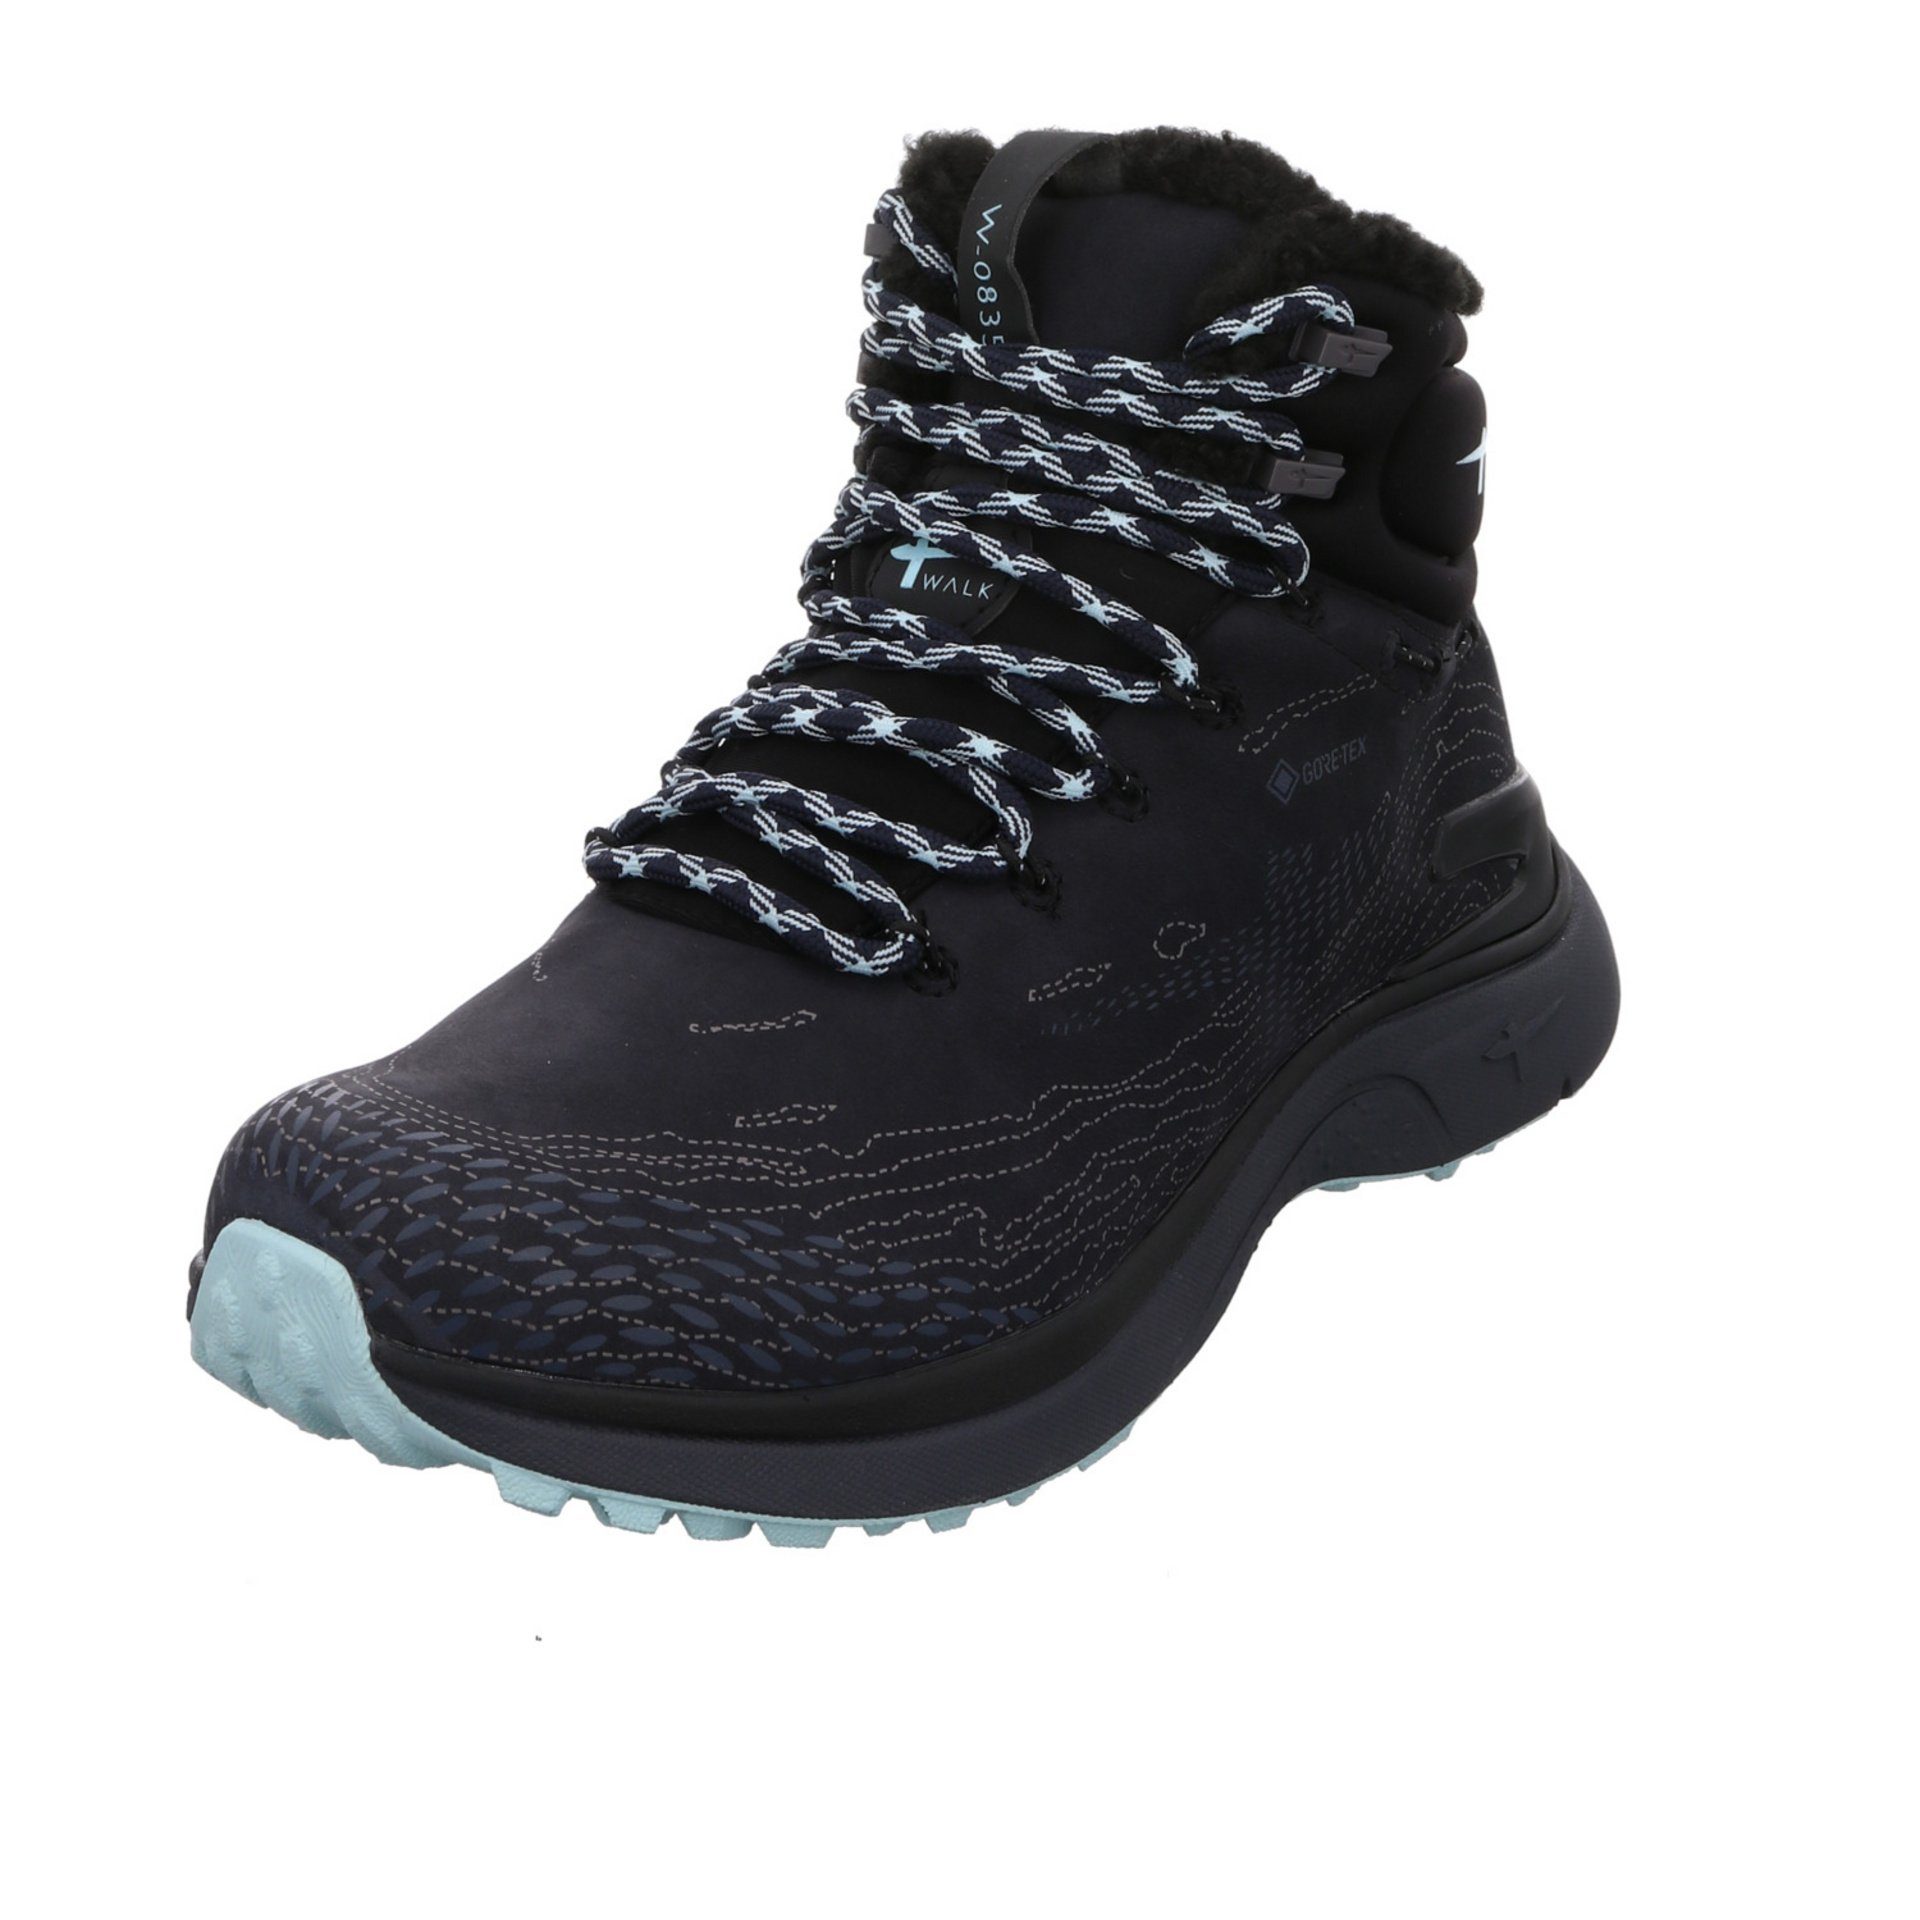 Schuhe Tamaris dunkel Outdoor blau Outdoorschuh Leder-/Textilkombination Outdoorschuh Gore-Tex Damen